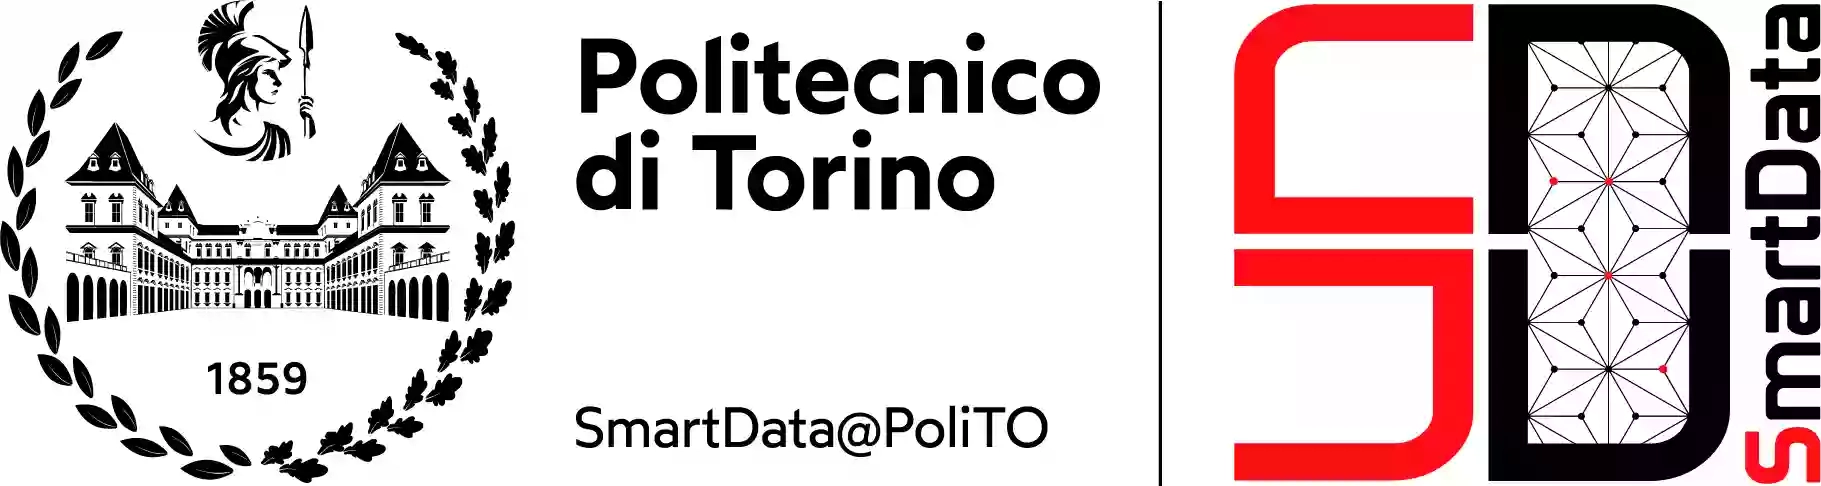 SmartData@PoliTO - Big Data, Machine Learning and Data Science centre